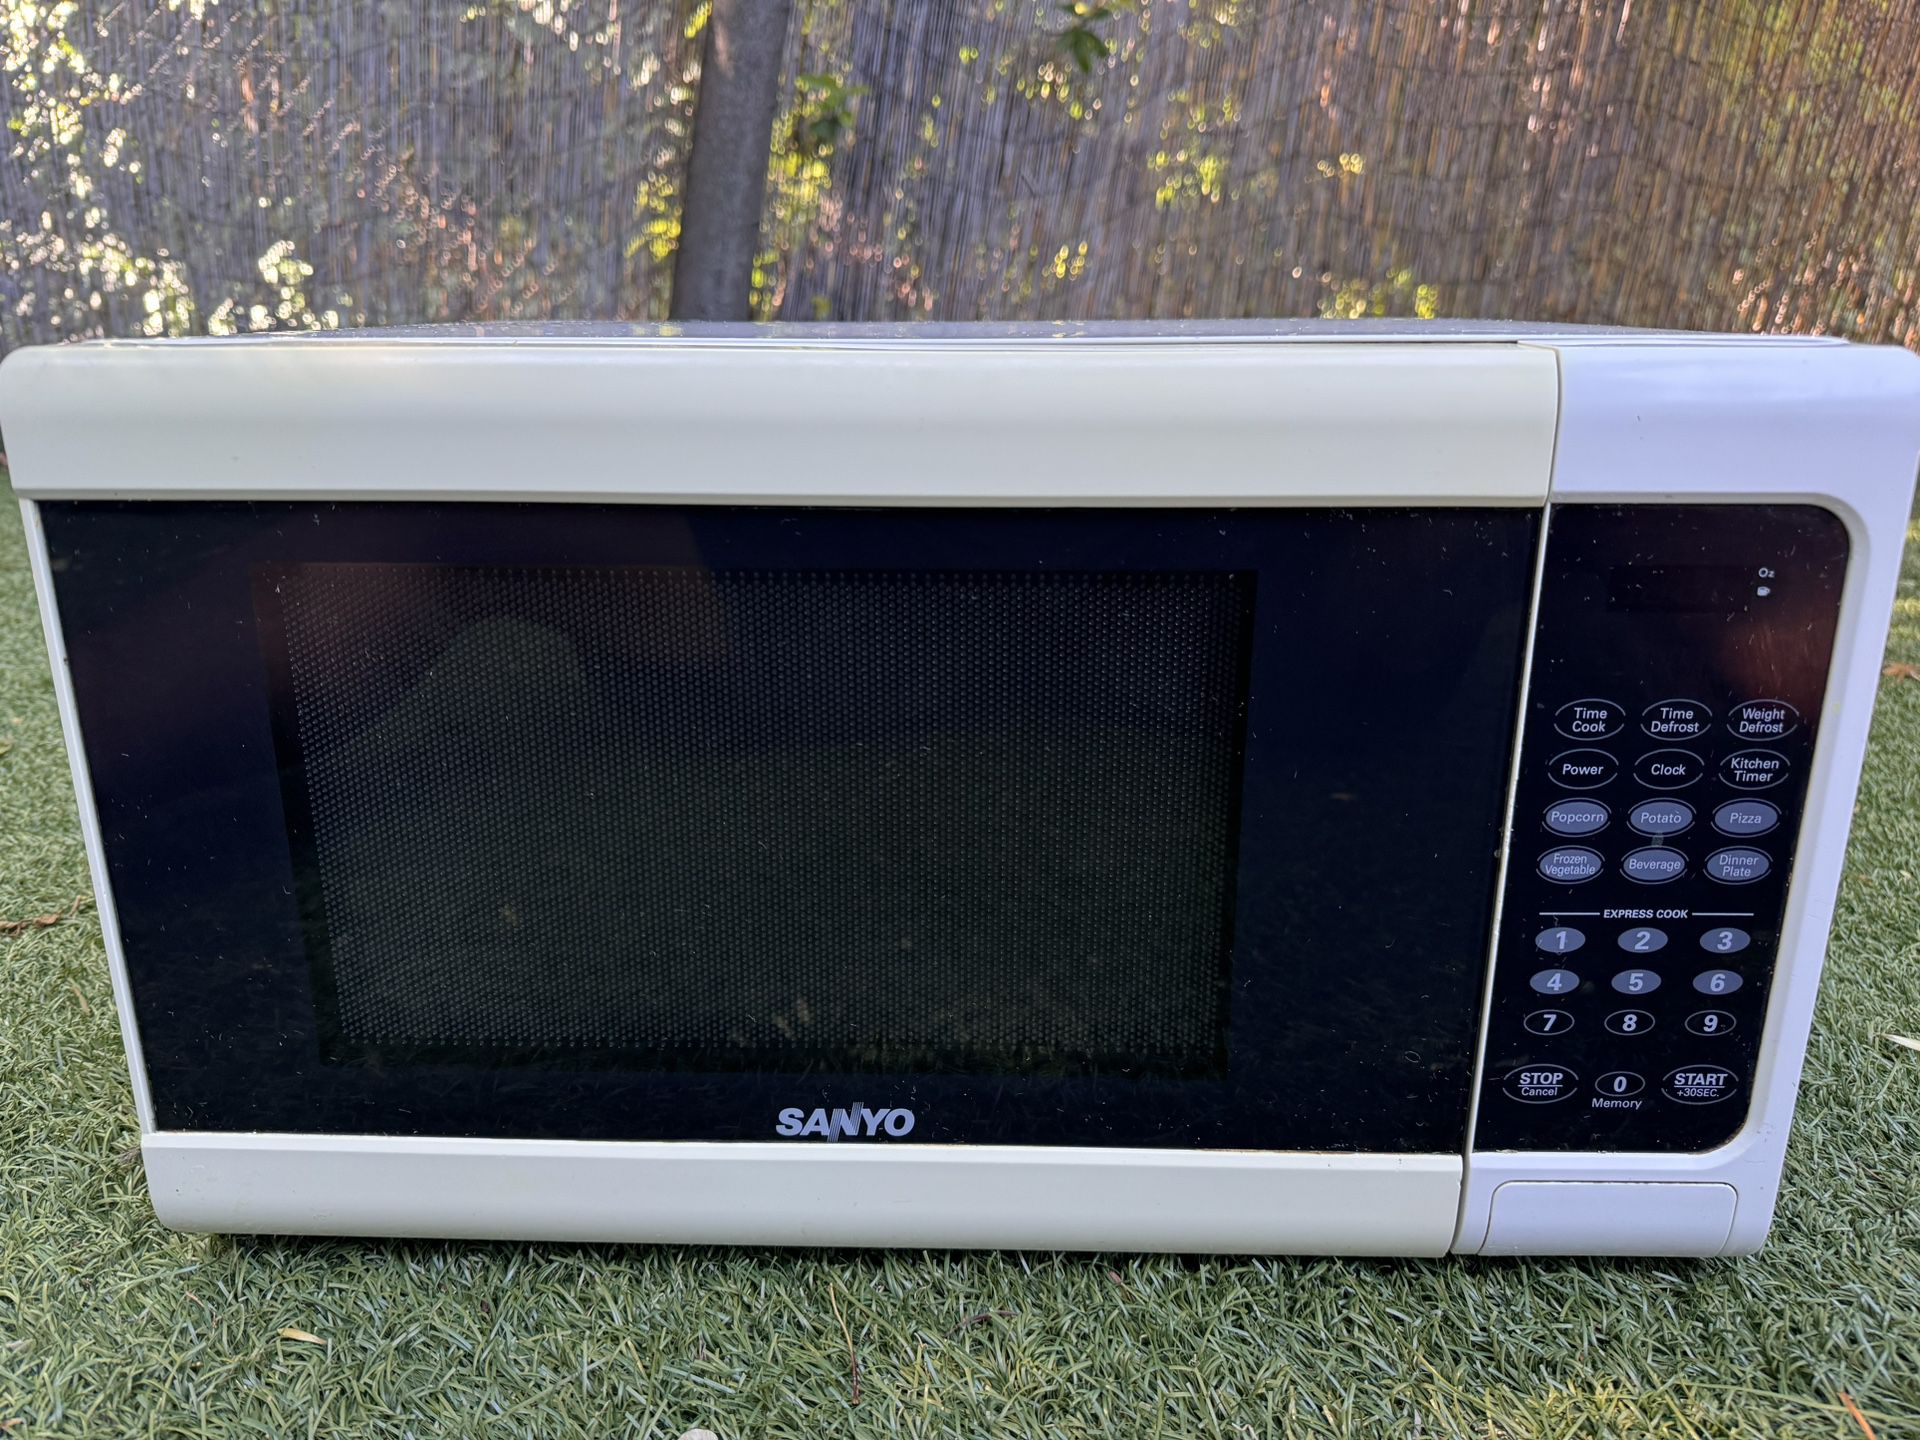 Sanyo microwave Oven